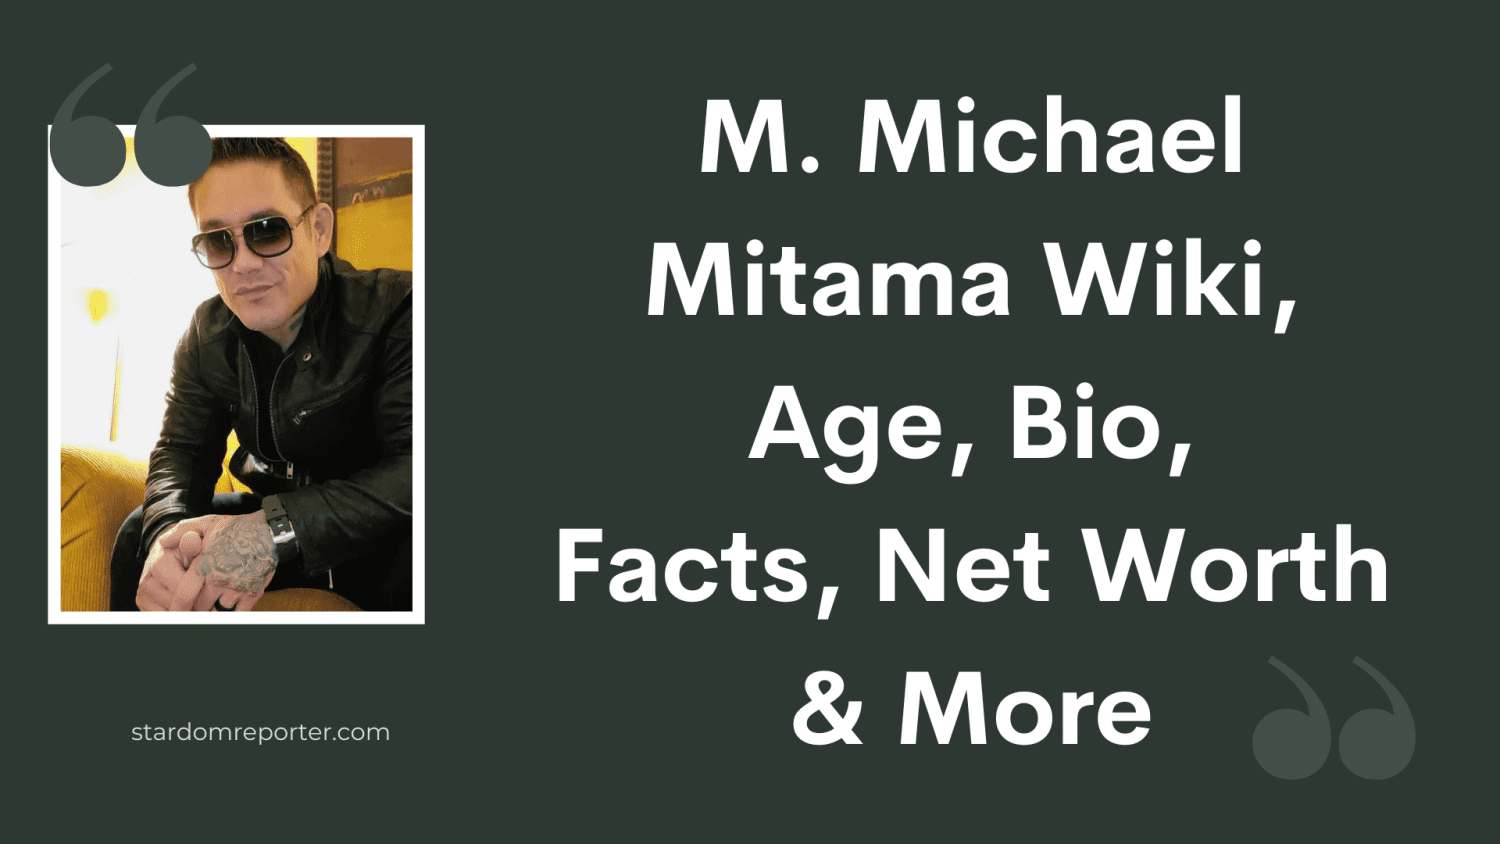 M. Michael Mitama Wiki, Age, Bio, Facts, Net Worth & More - 13